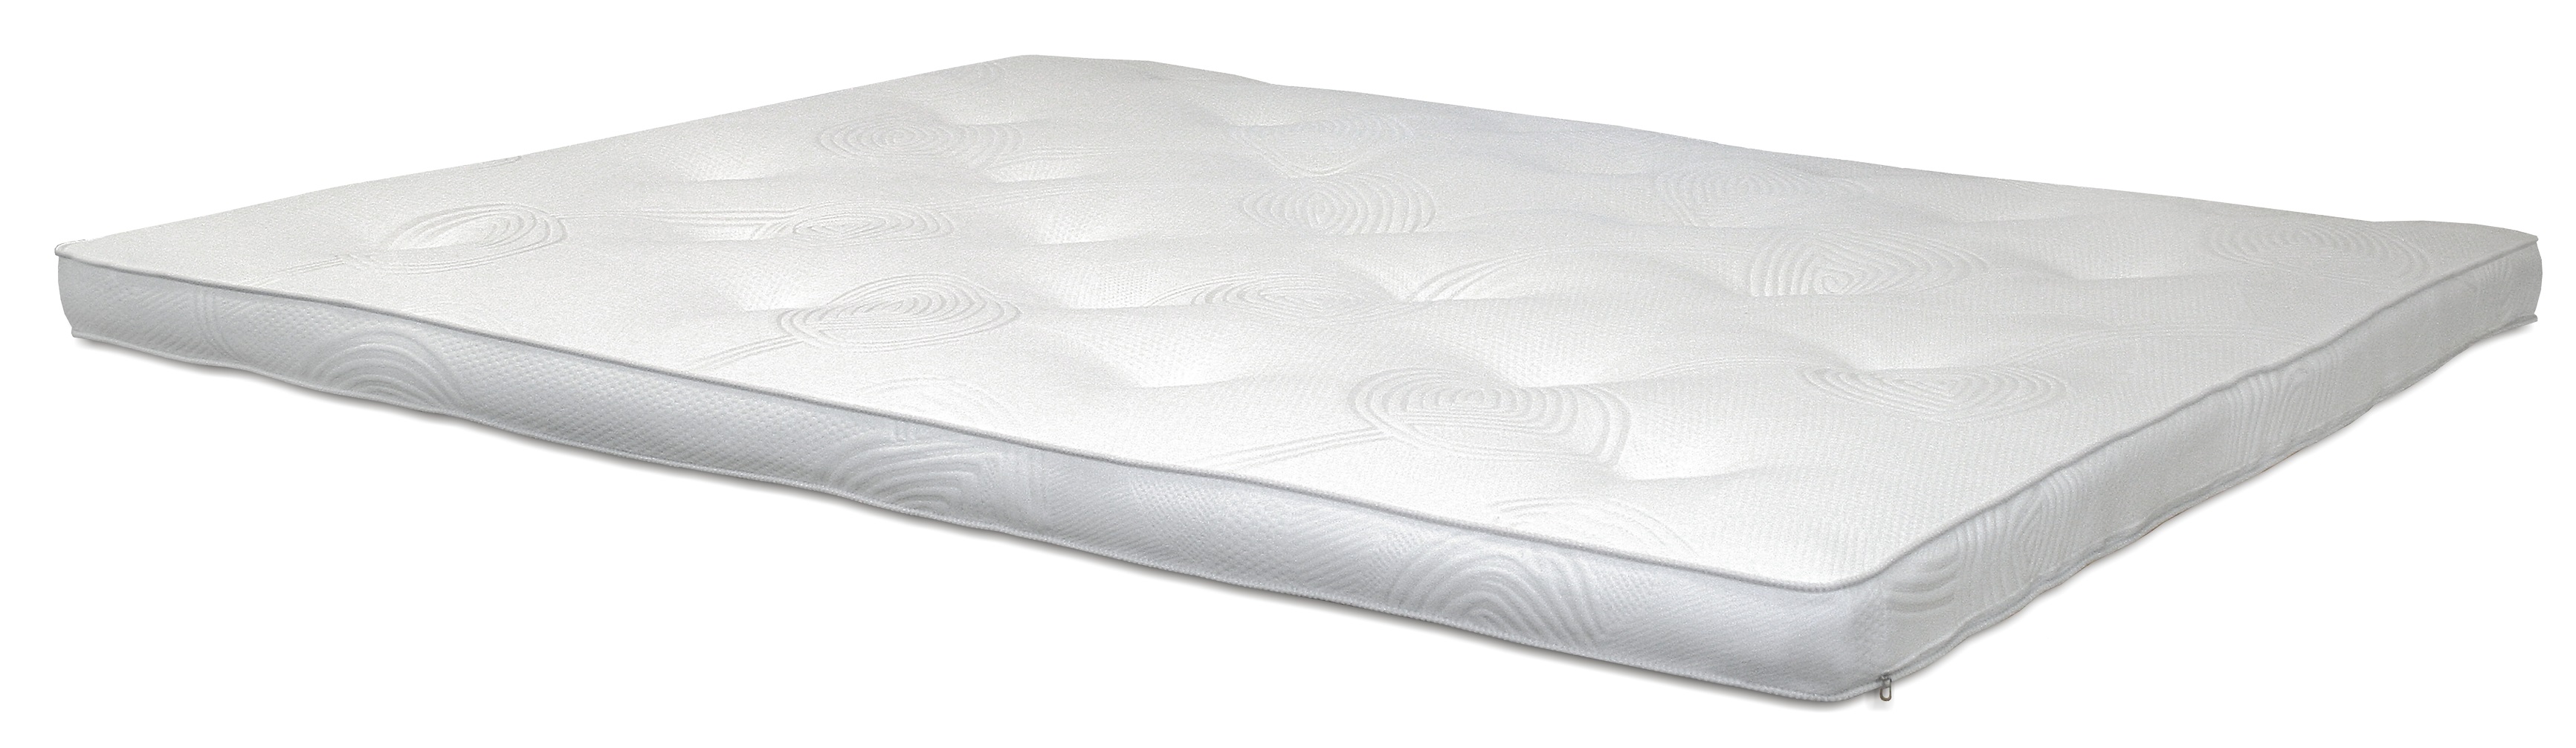 GRAND TOP mattress WHITE 1 15